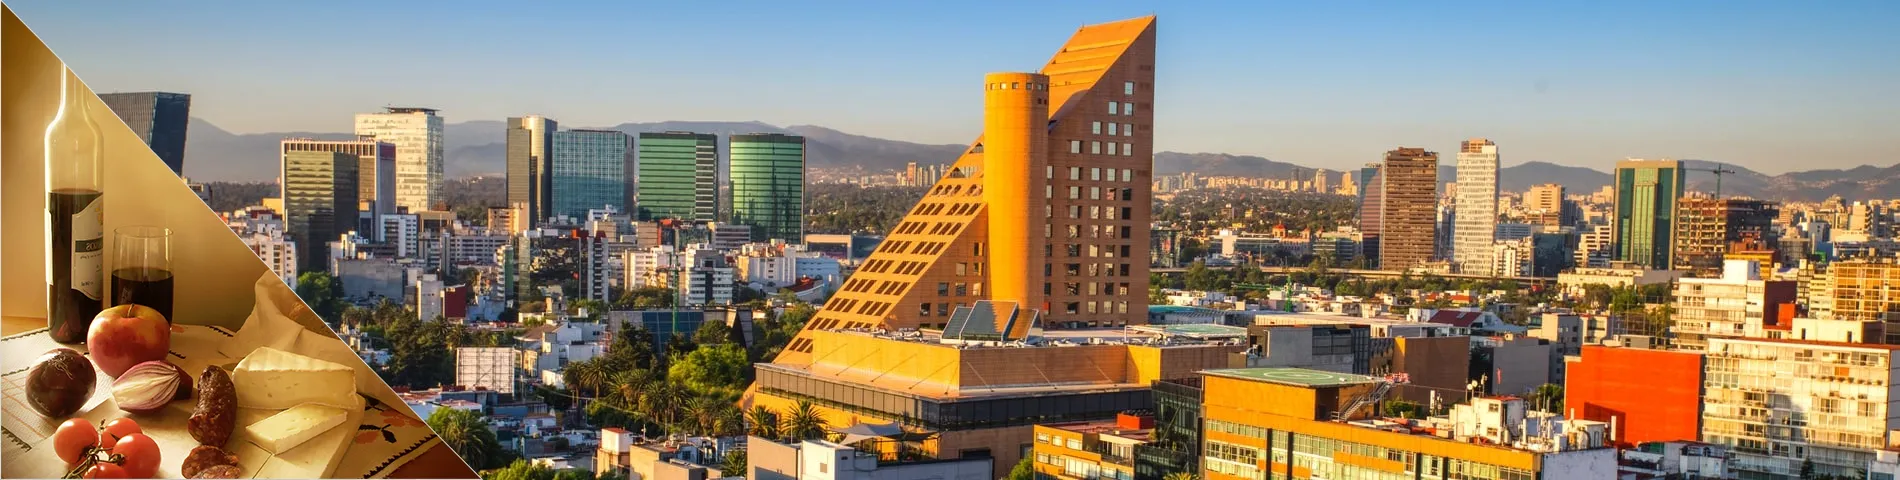 Mexico City - 